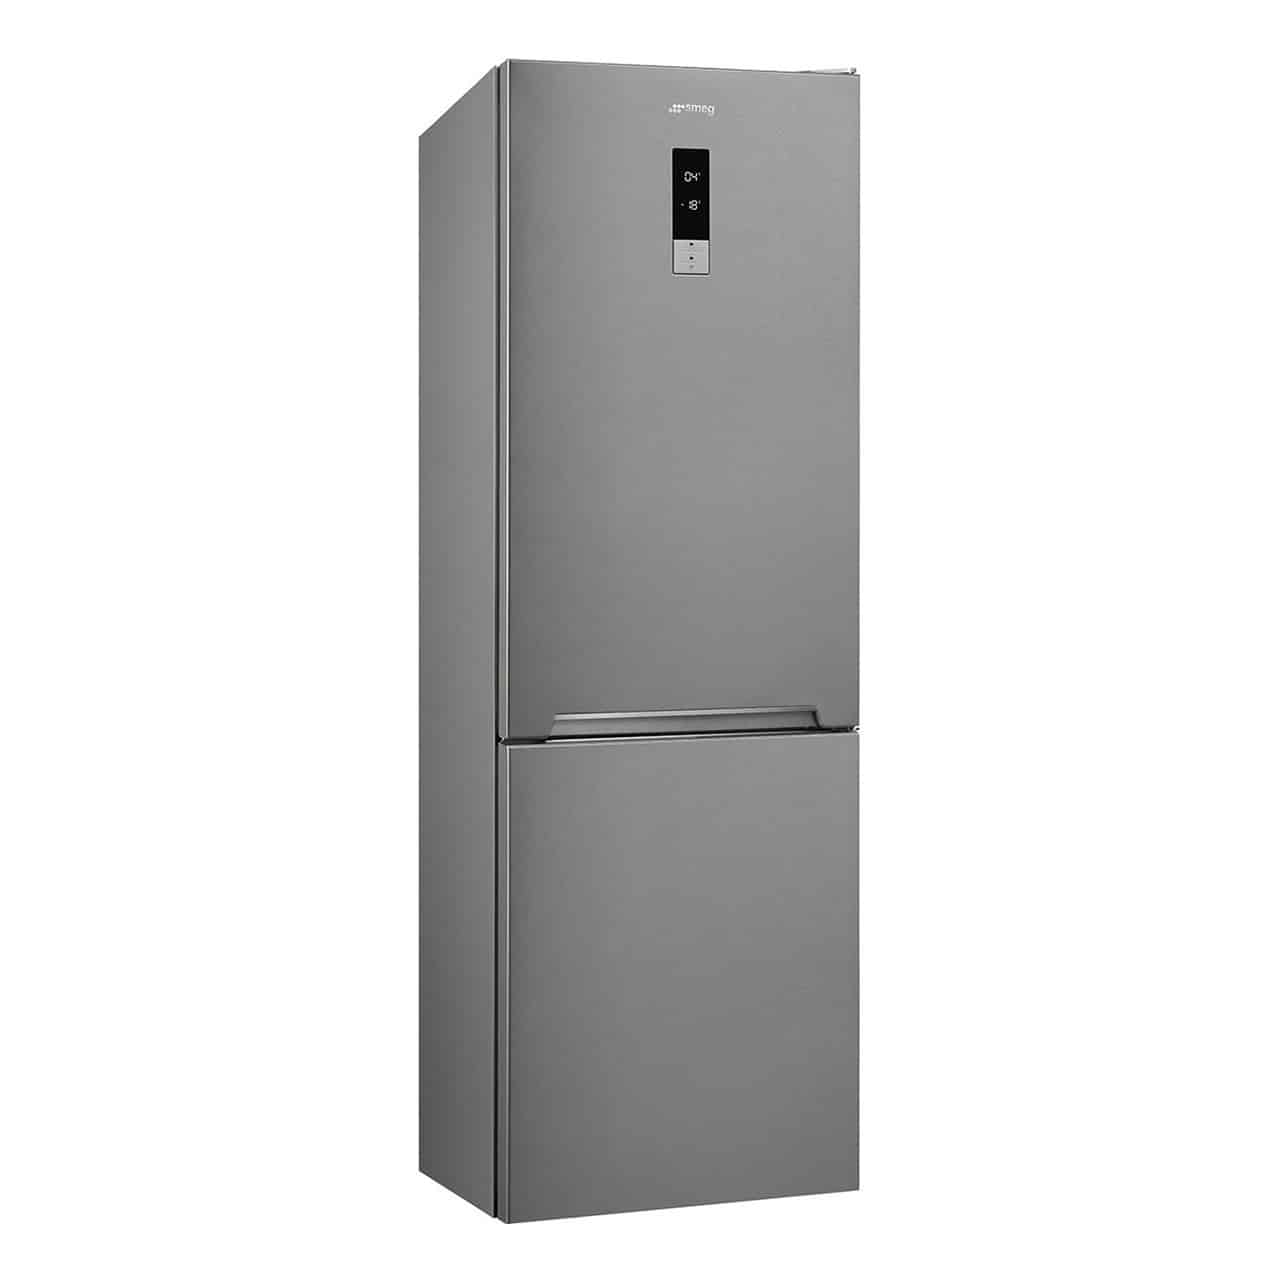 Smeg - Stainless Steel Combi Refrigerator - FC18EN4AX